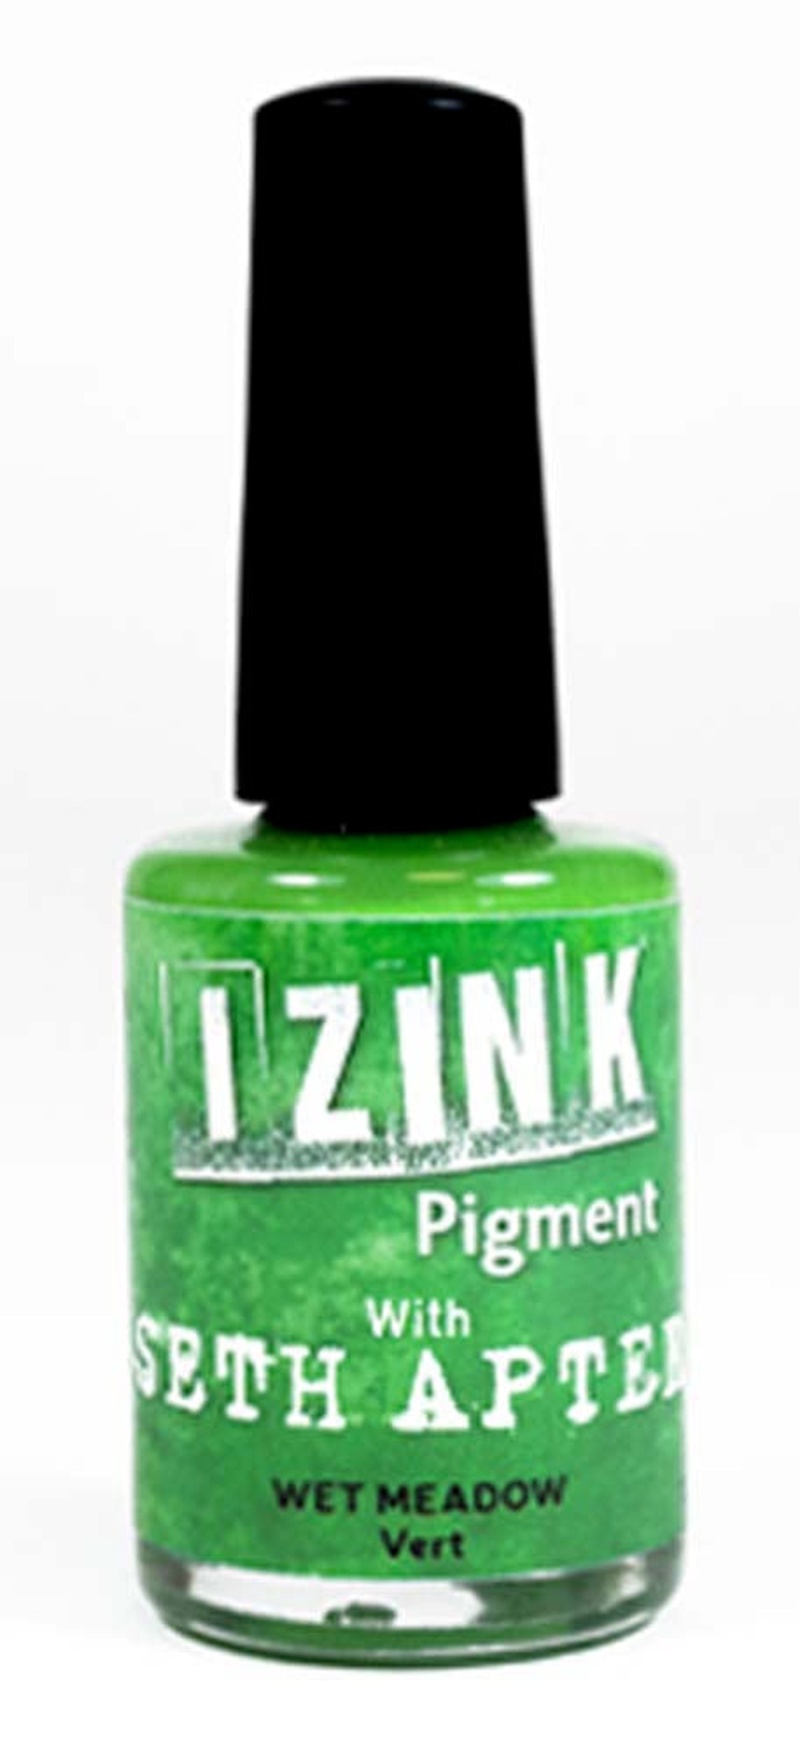 Izink Pigment Seth Apter